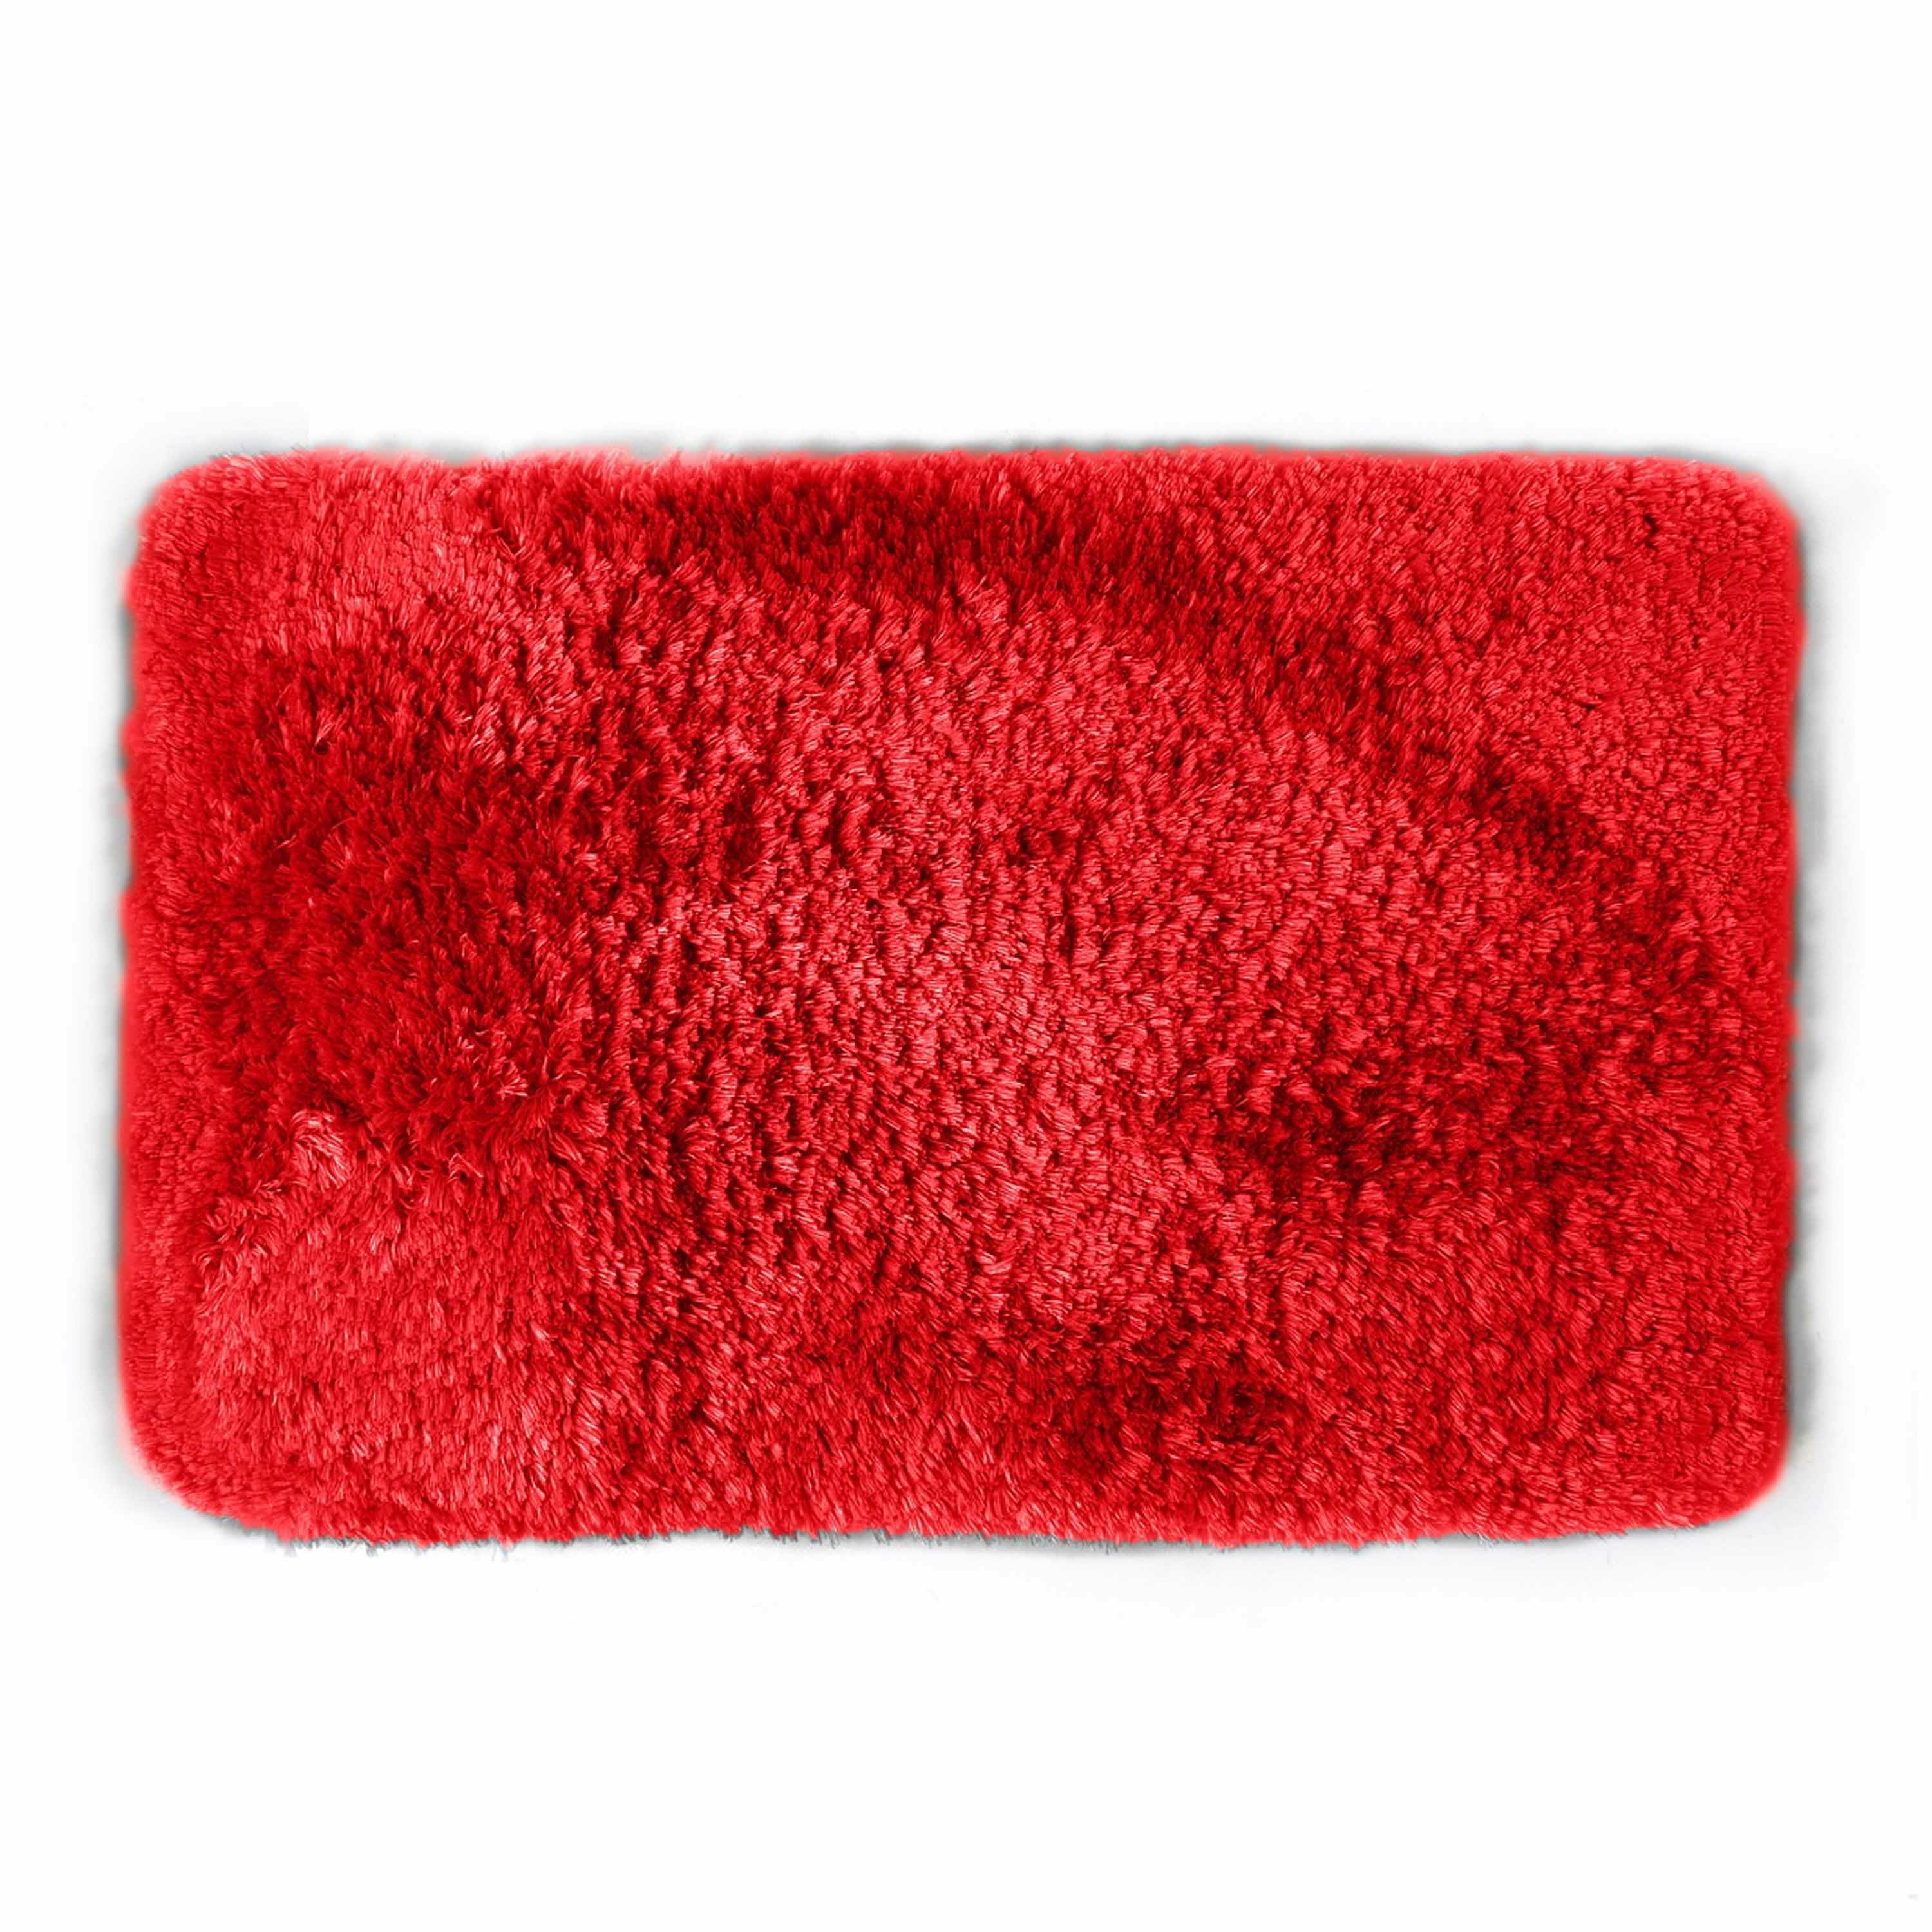 Spirella badkamer vloer kleedje-badmat tapijt hoogpolig en luxe uitvoering rood 40 x 60 cm Microfibe